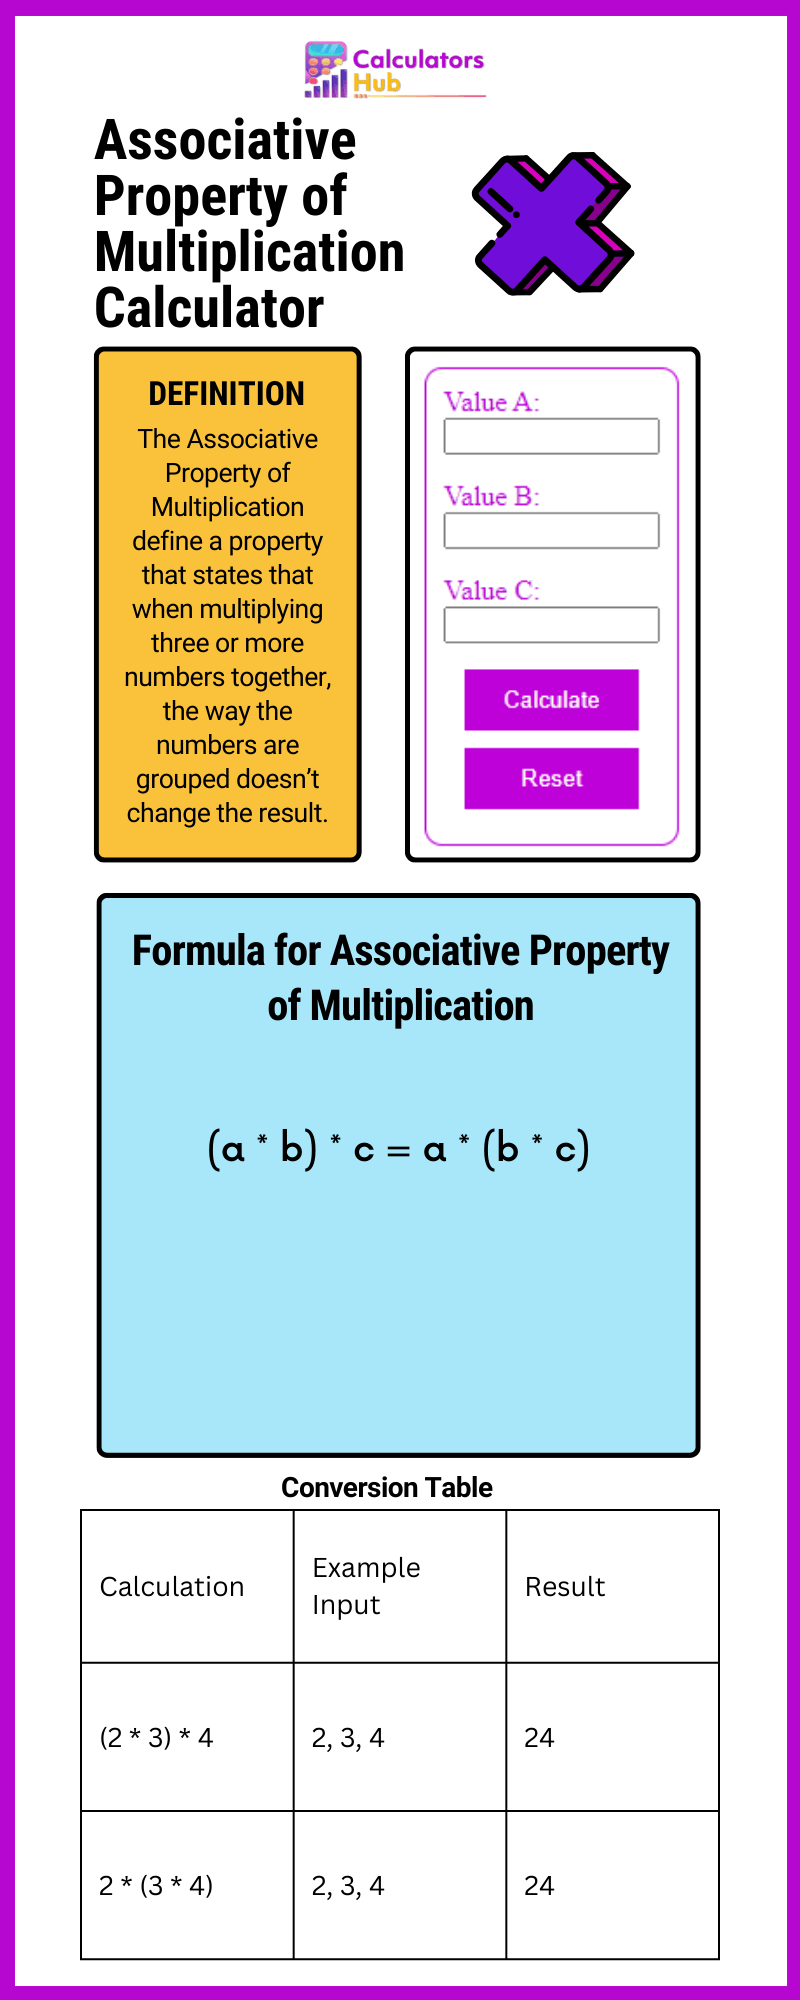 Associative Property of Multiplication Calculator